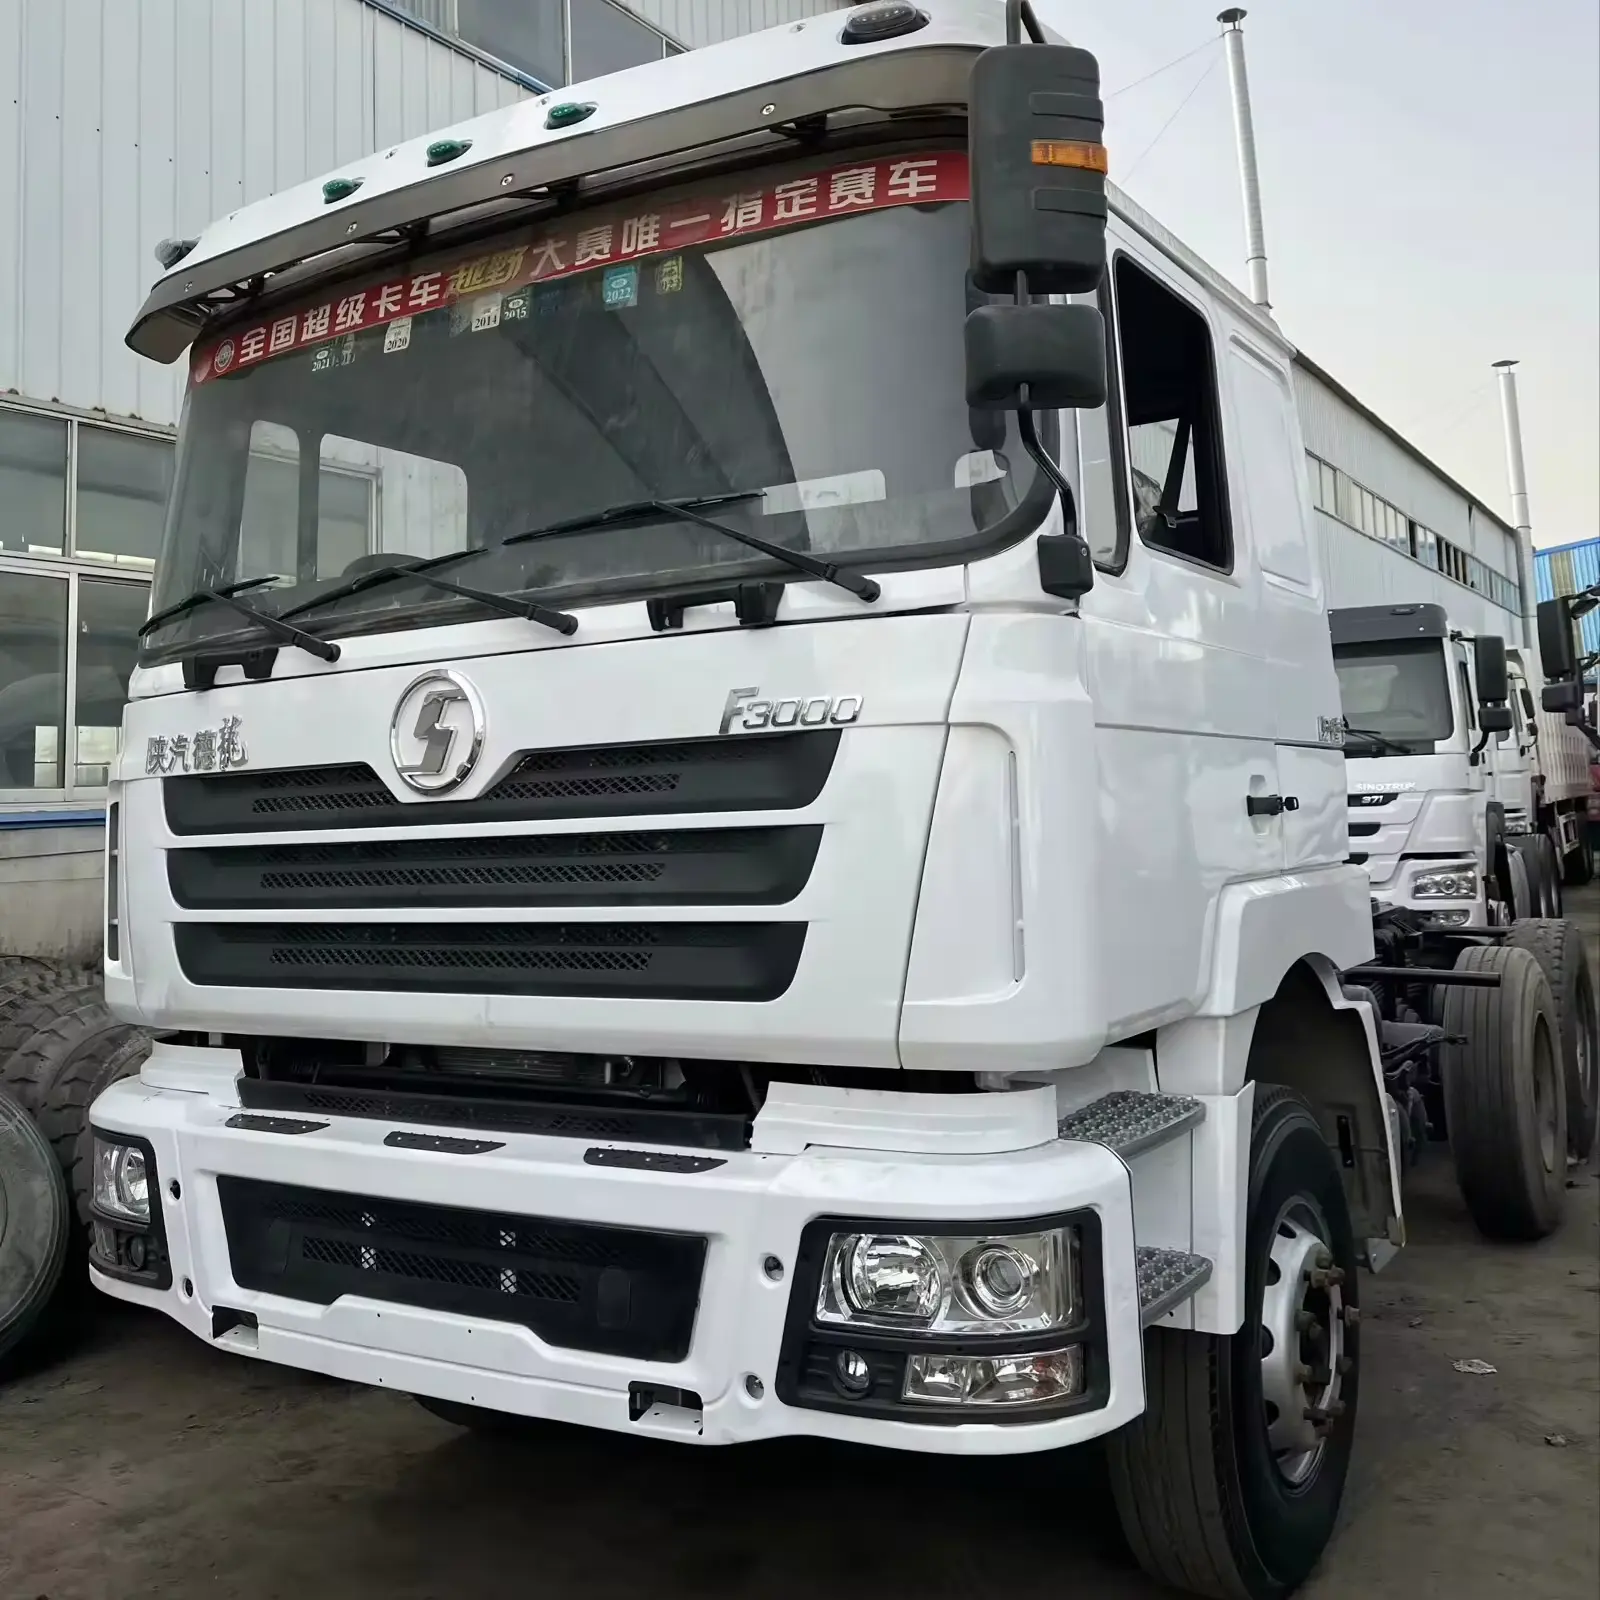 SINOTRUK HOWO White 6x4 tractor truck for dangote in nigeria